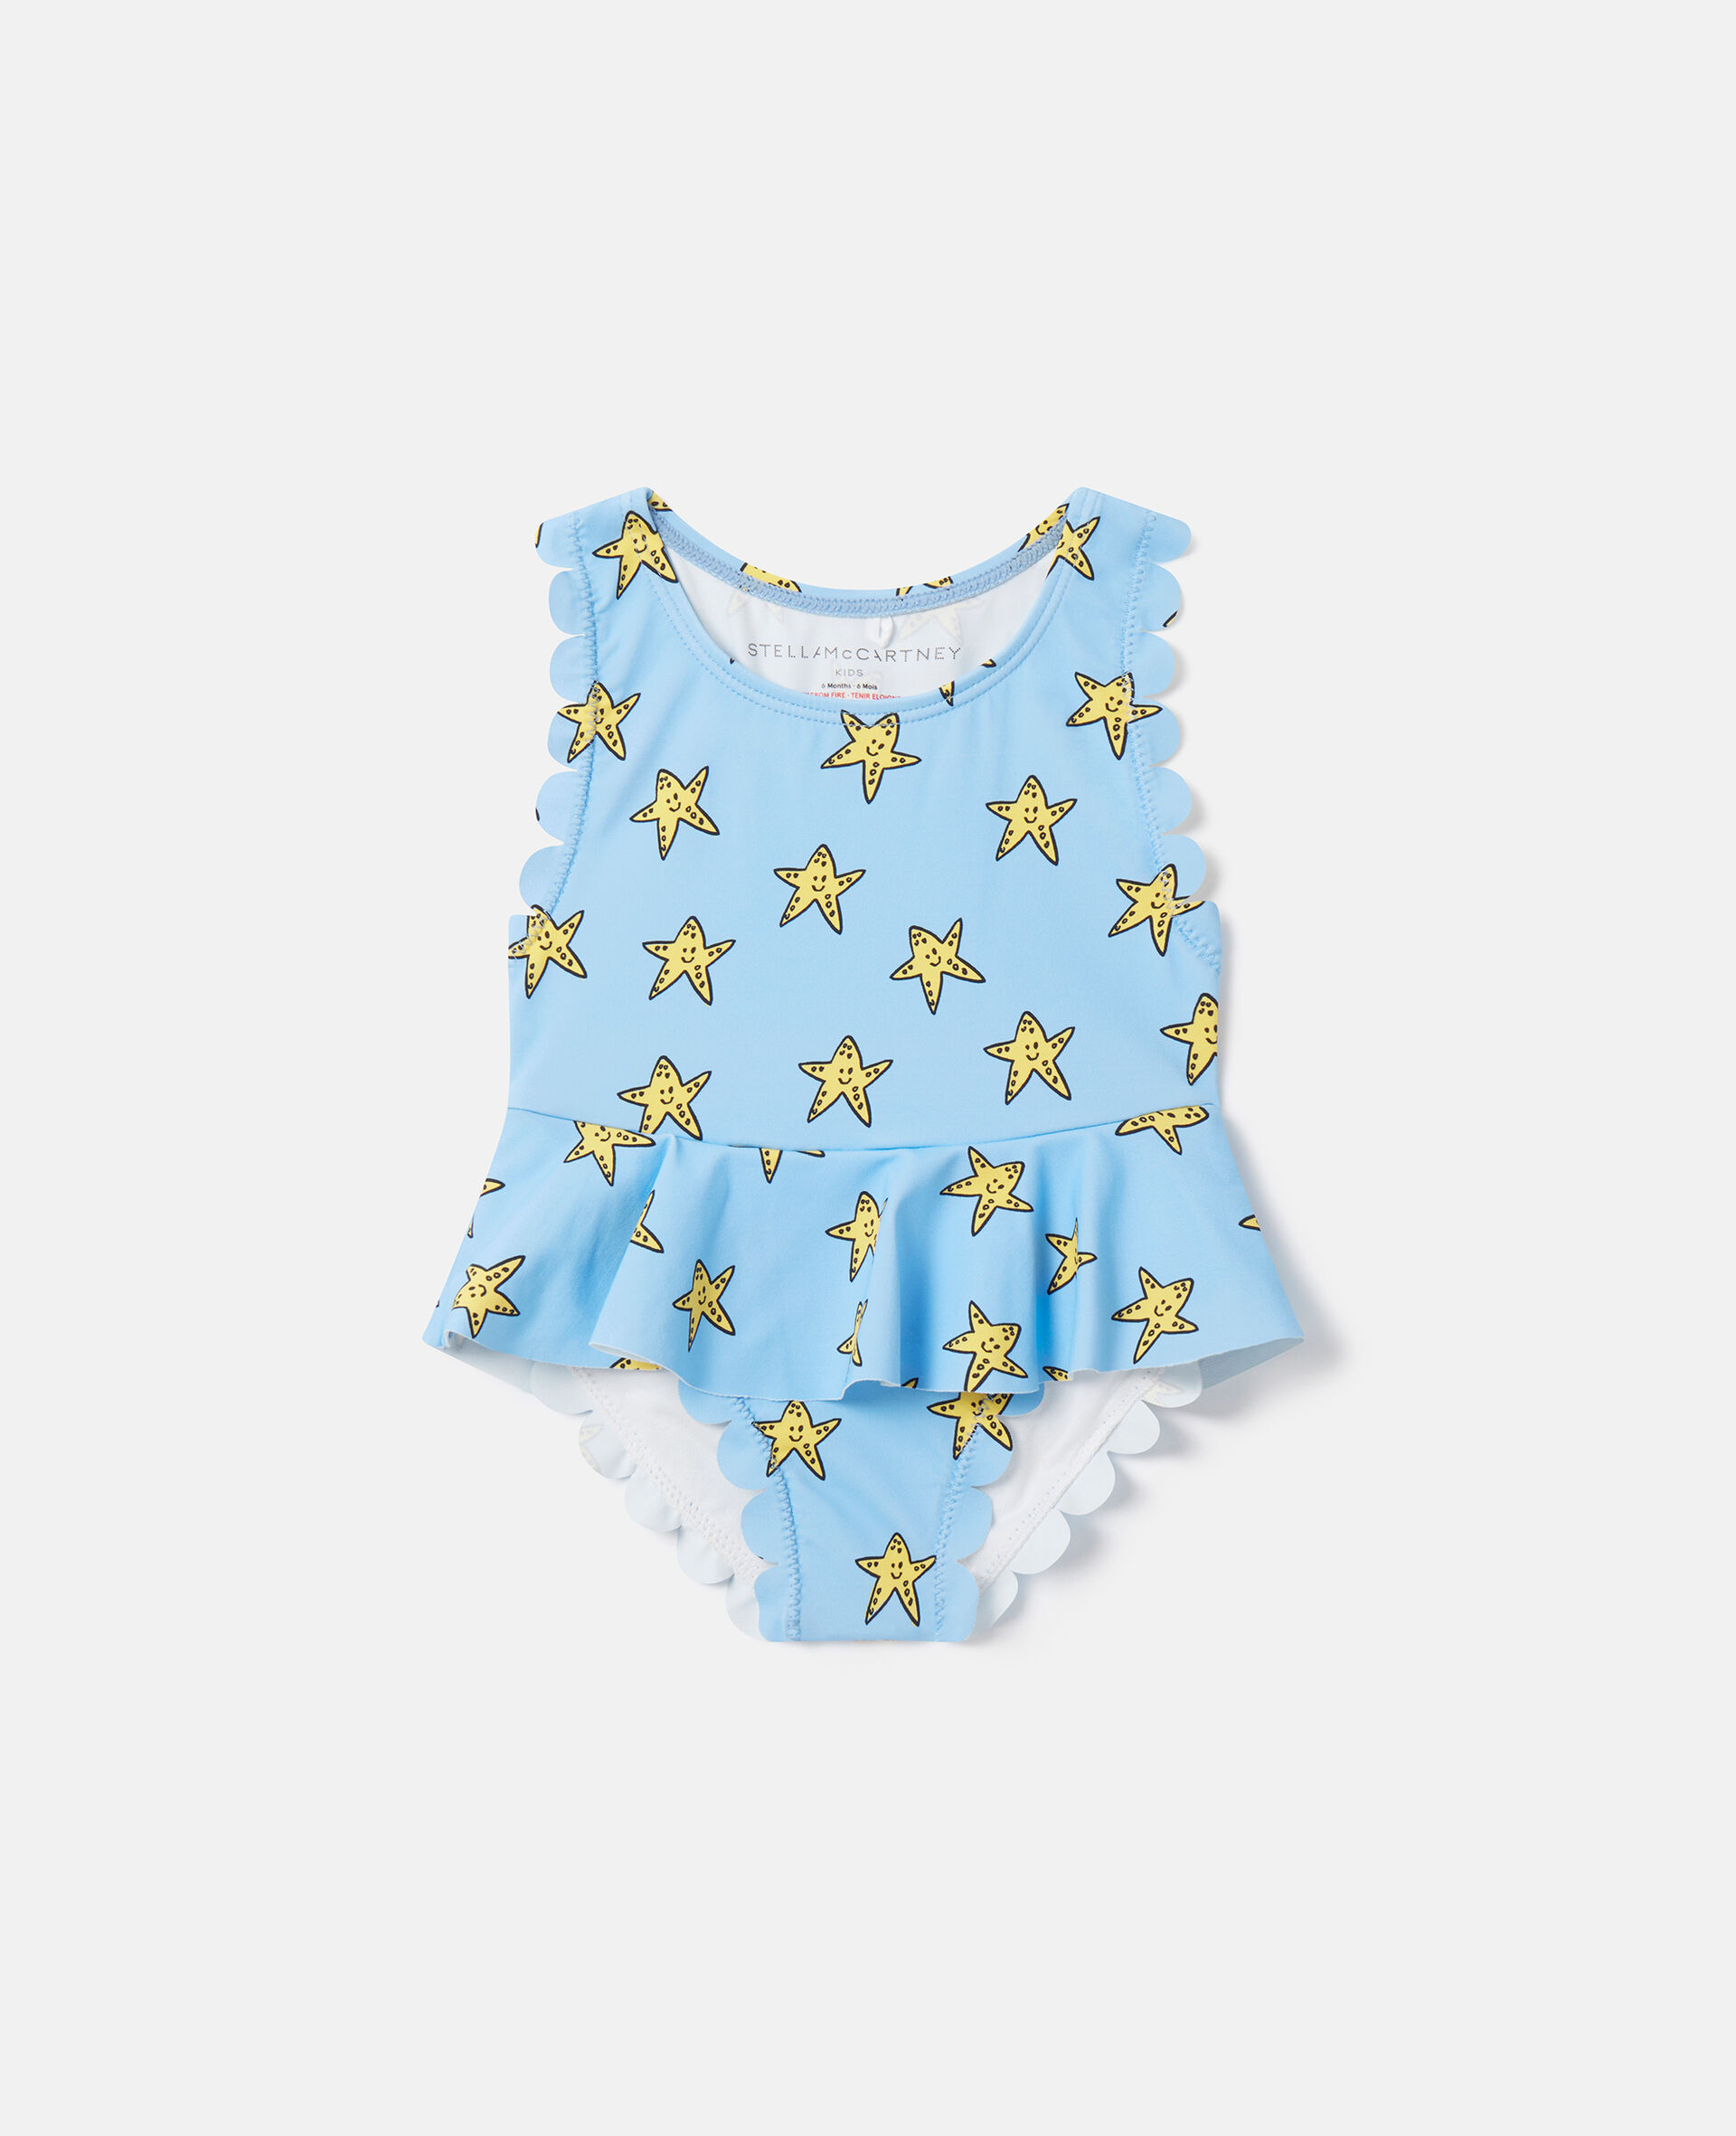 Smiling Stella Star Print Swimsuit-Blue-large image number 0